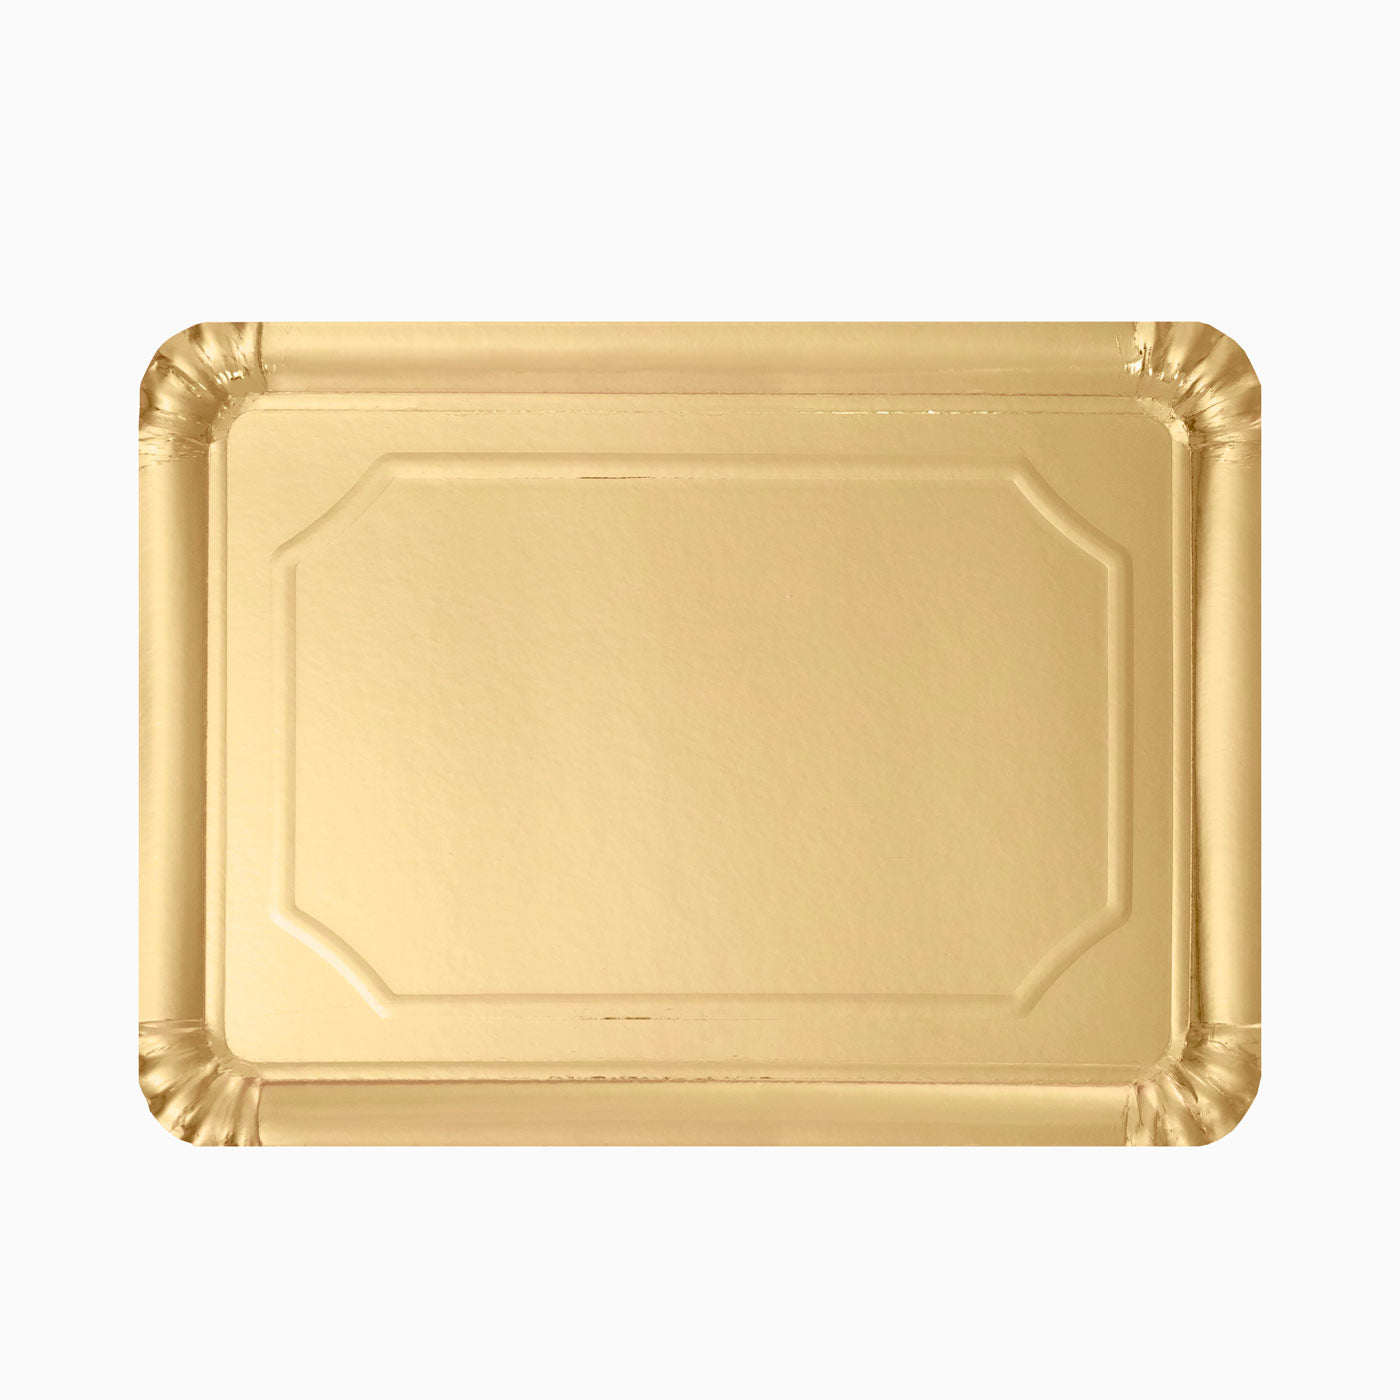 Metallic rectangular tray 25 x 34 cm gold